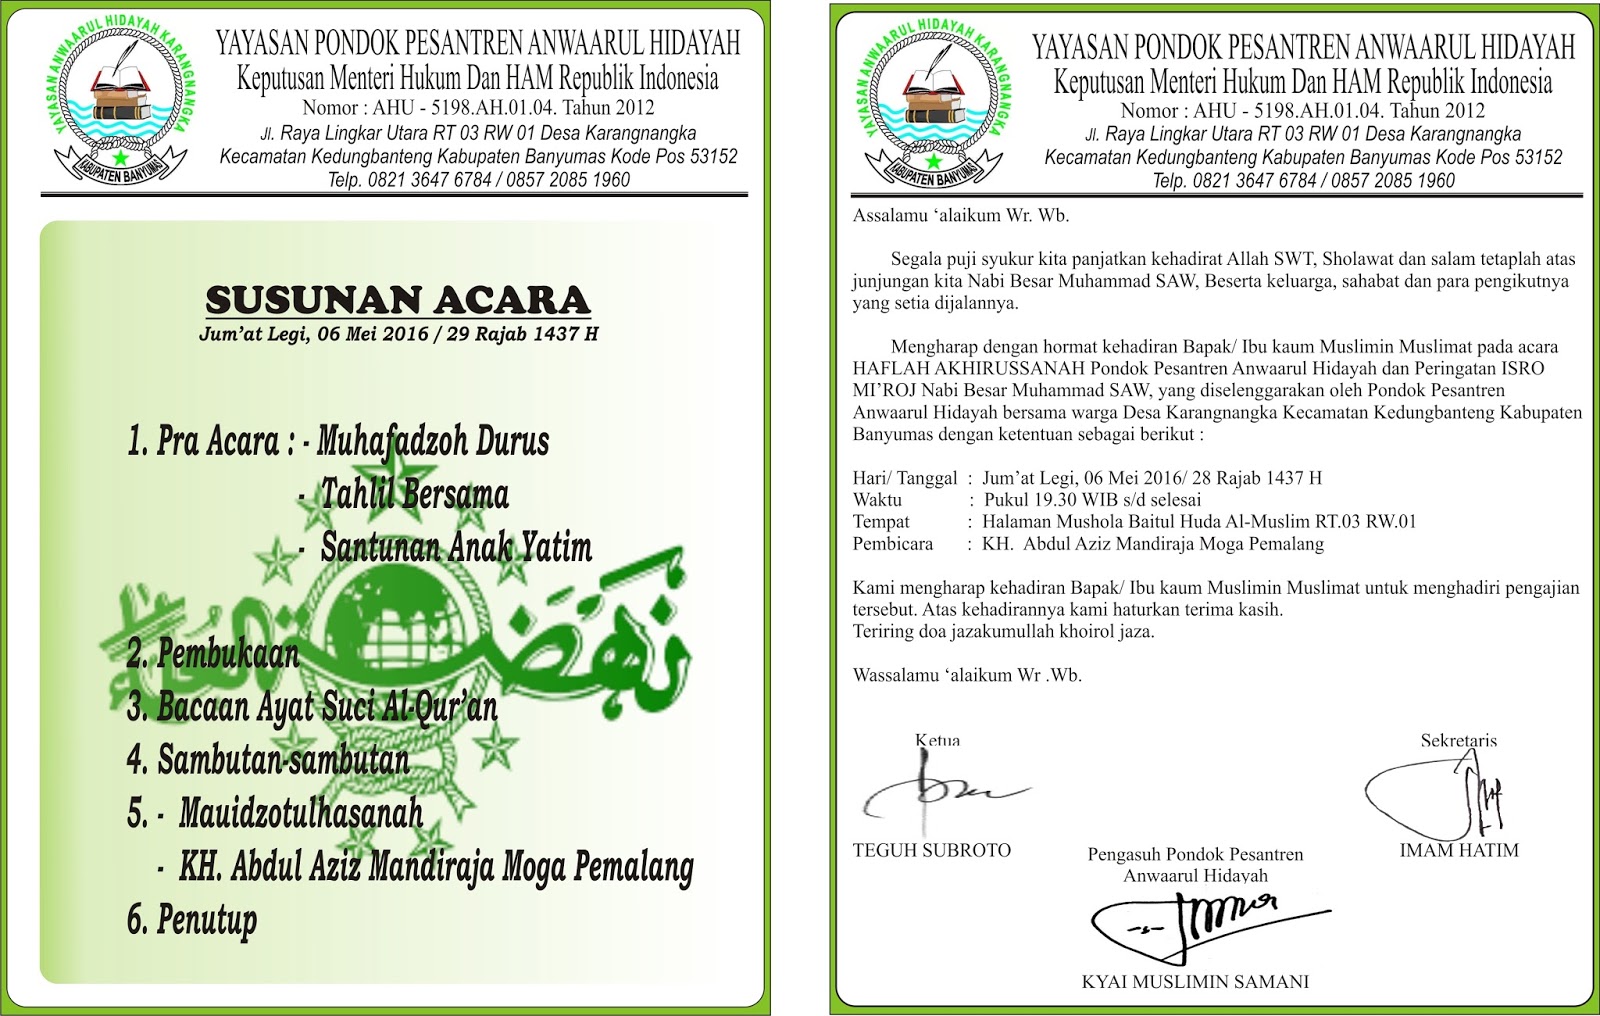 Yayasan Pondok Pesantren Anwaarul Hidayah